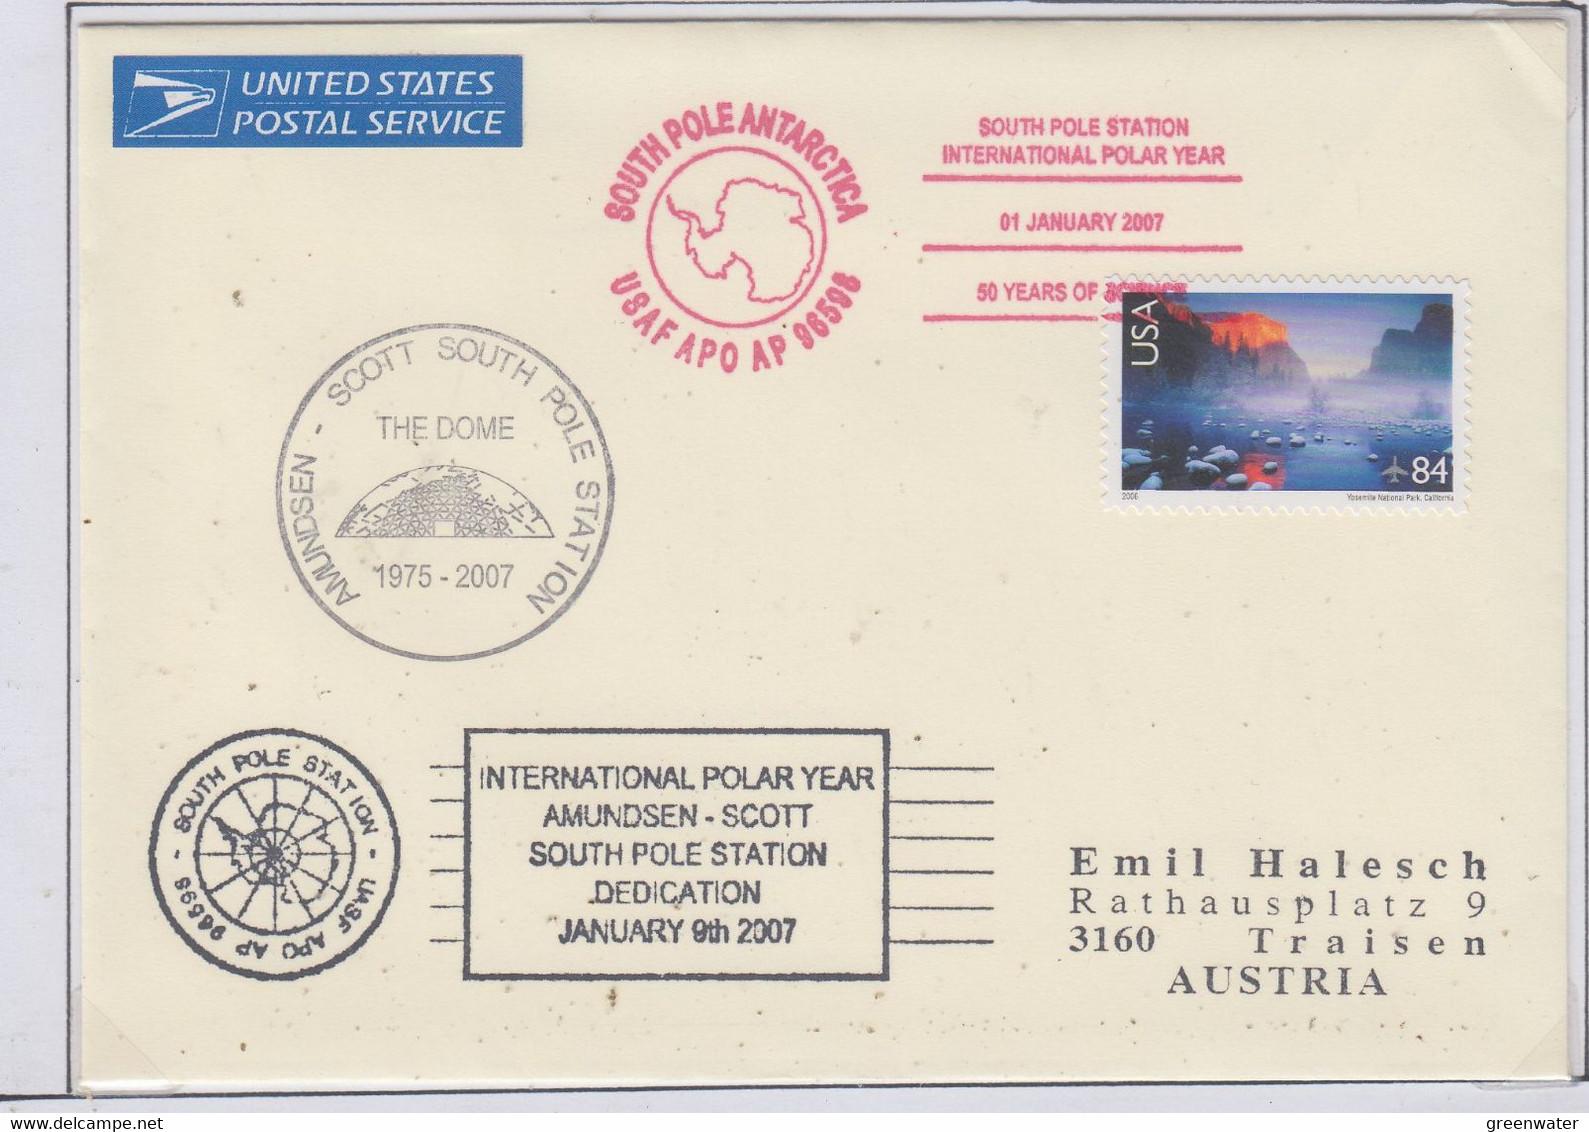 USA  South Pole Cover International Polar Year  Ca South Pole Station 01 JANUARY 2007 (PS191A) - Internationale Pooljaar